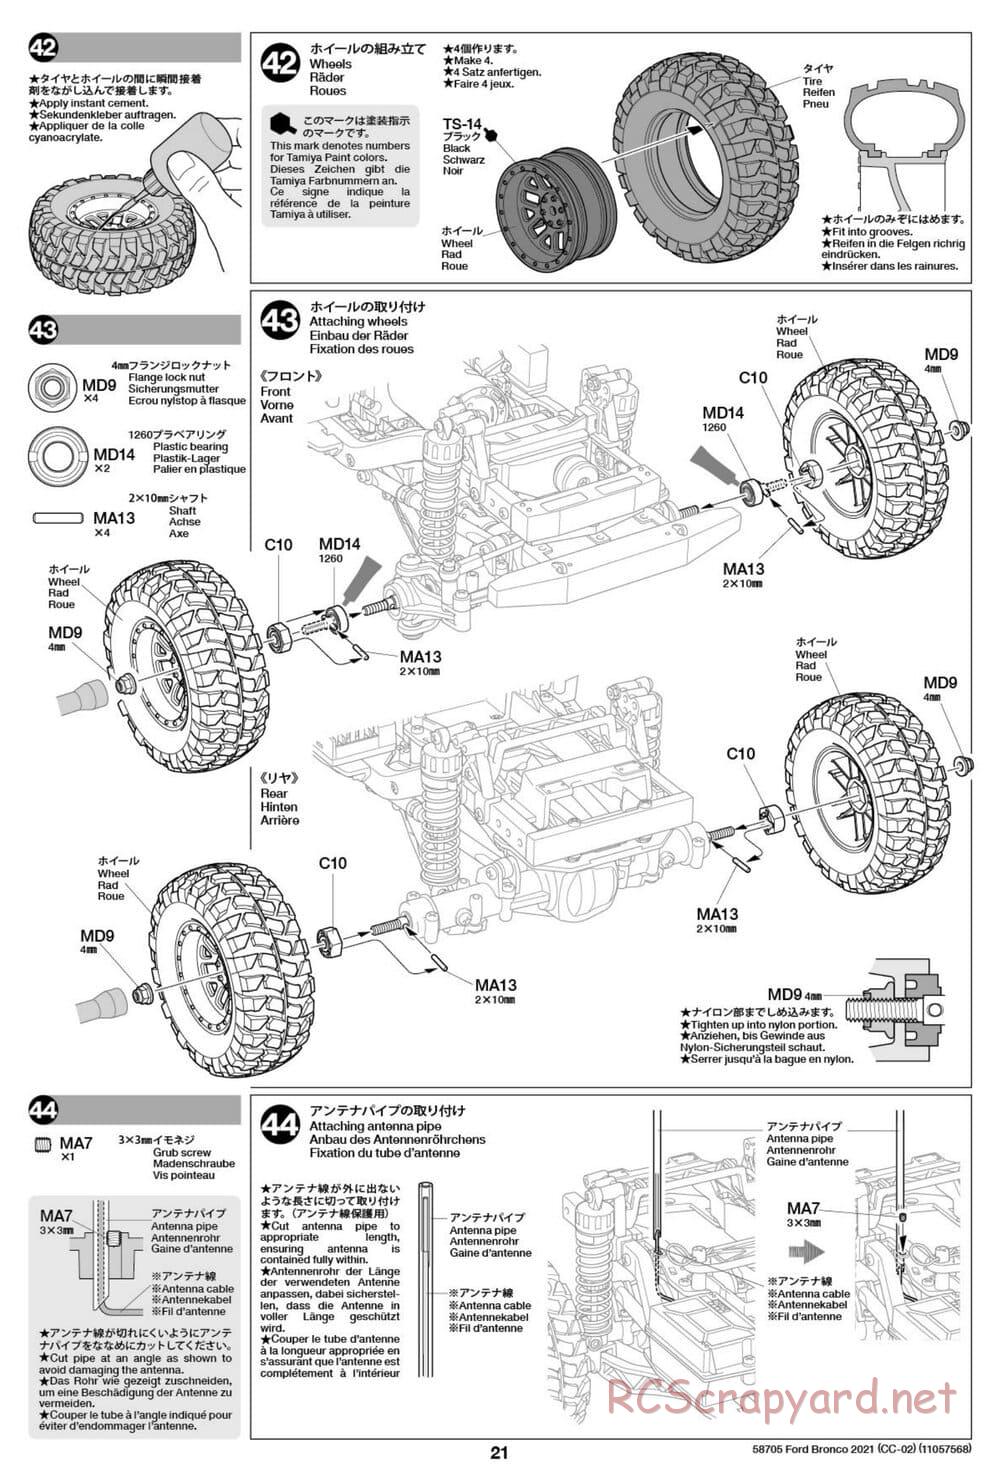 Tamiya - Ford Bronco 2021 - CC-02 Chassis - Manual - Page 21